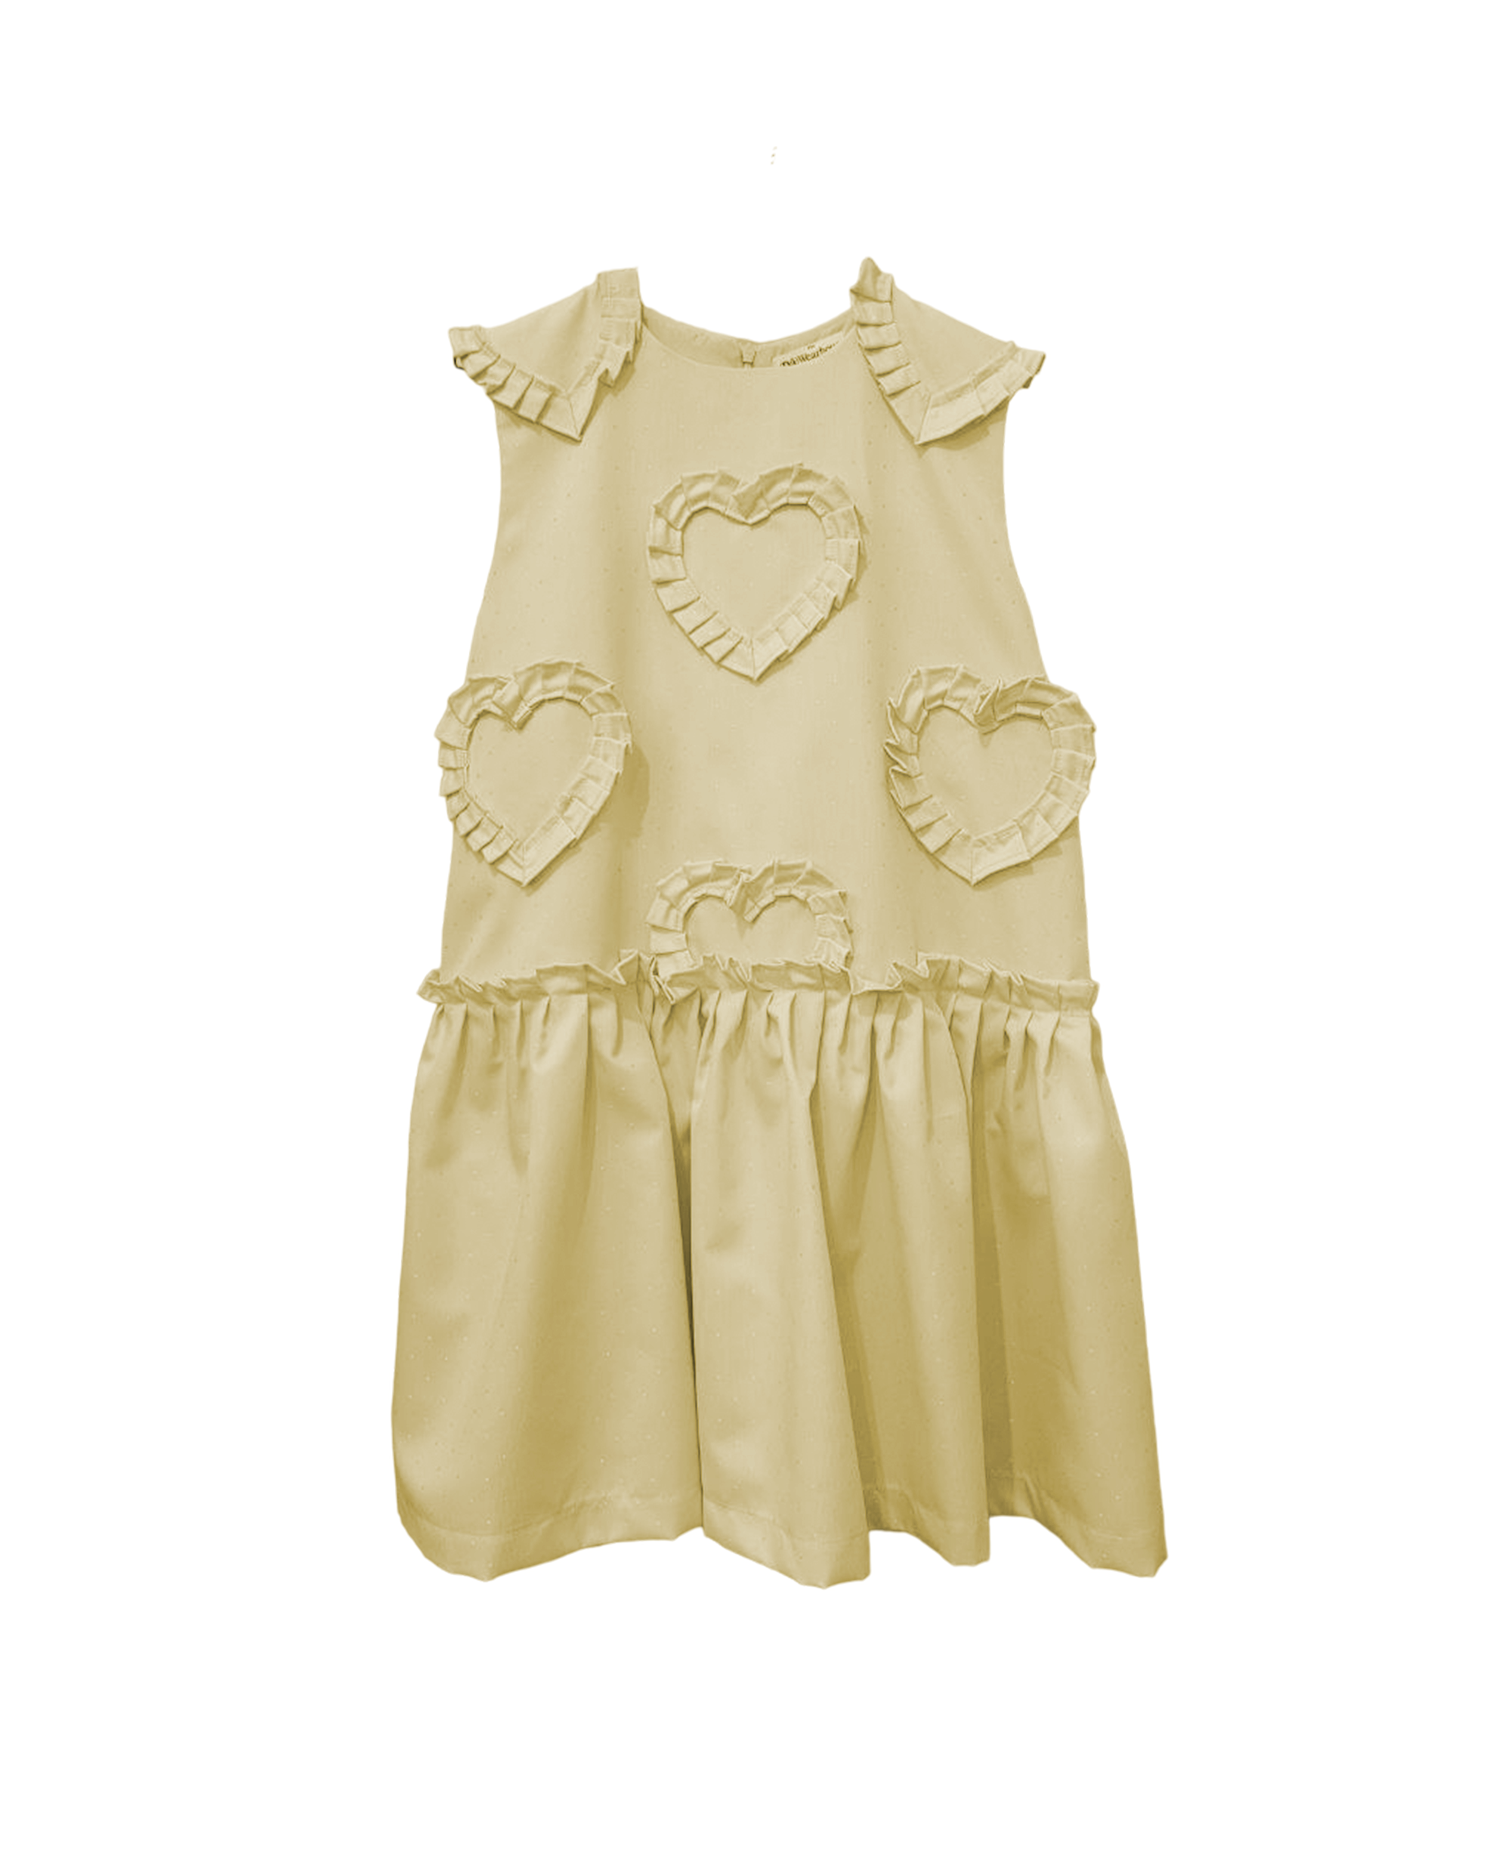 Dâfne Hearts Yellow Dress